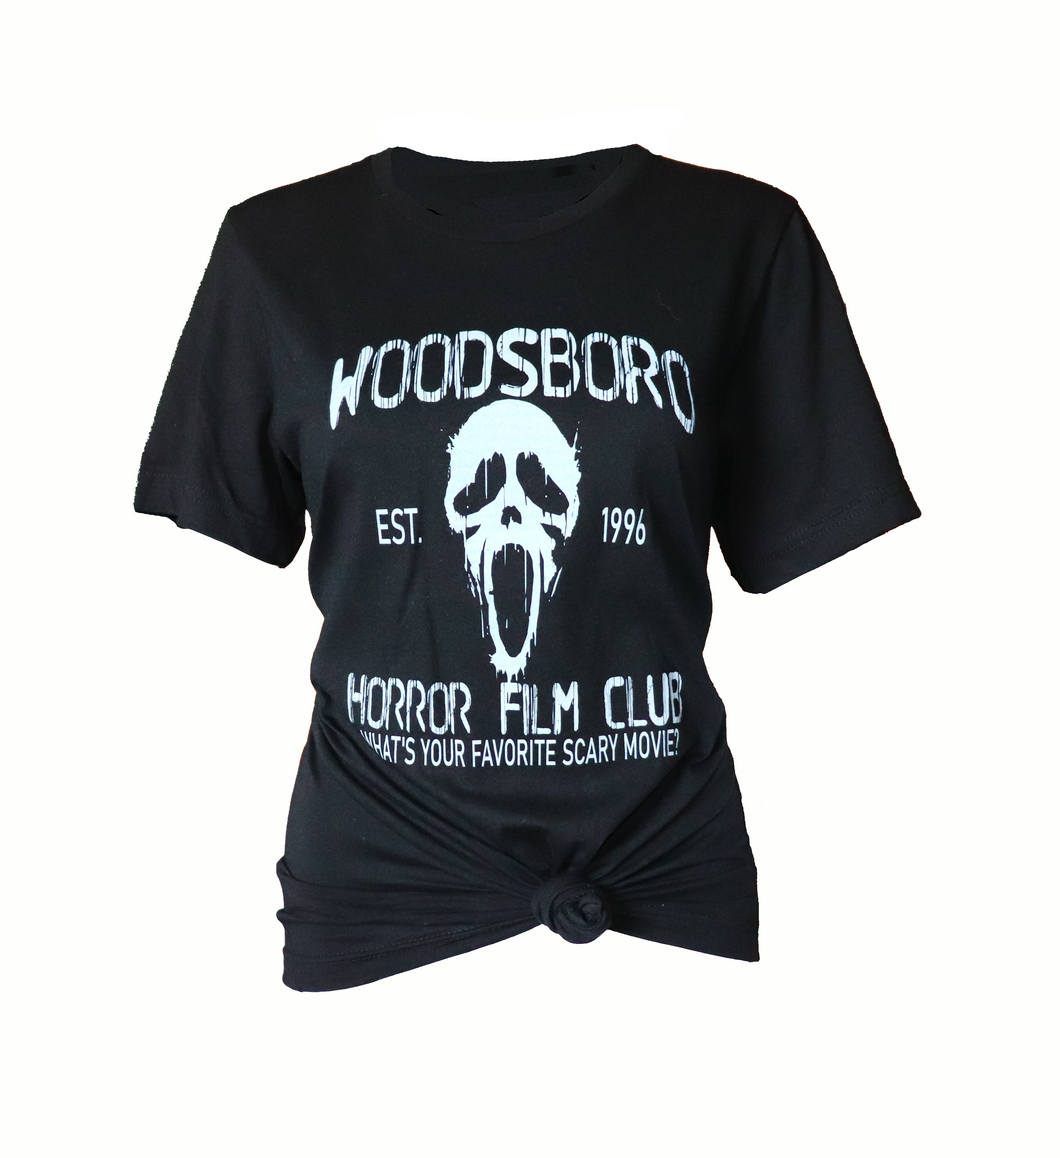 Woodsboro horror film club